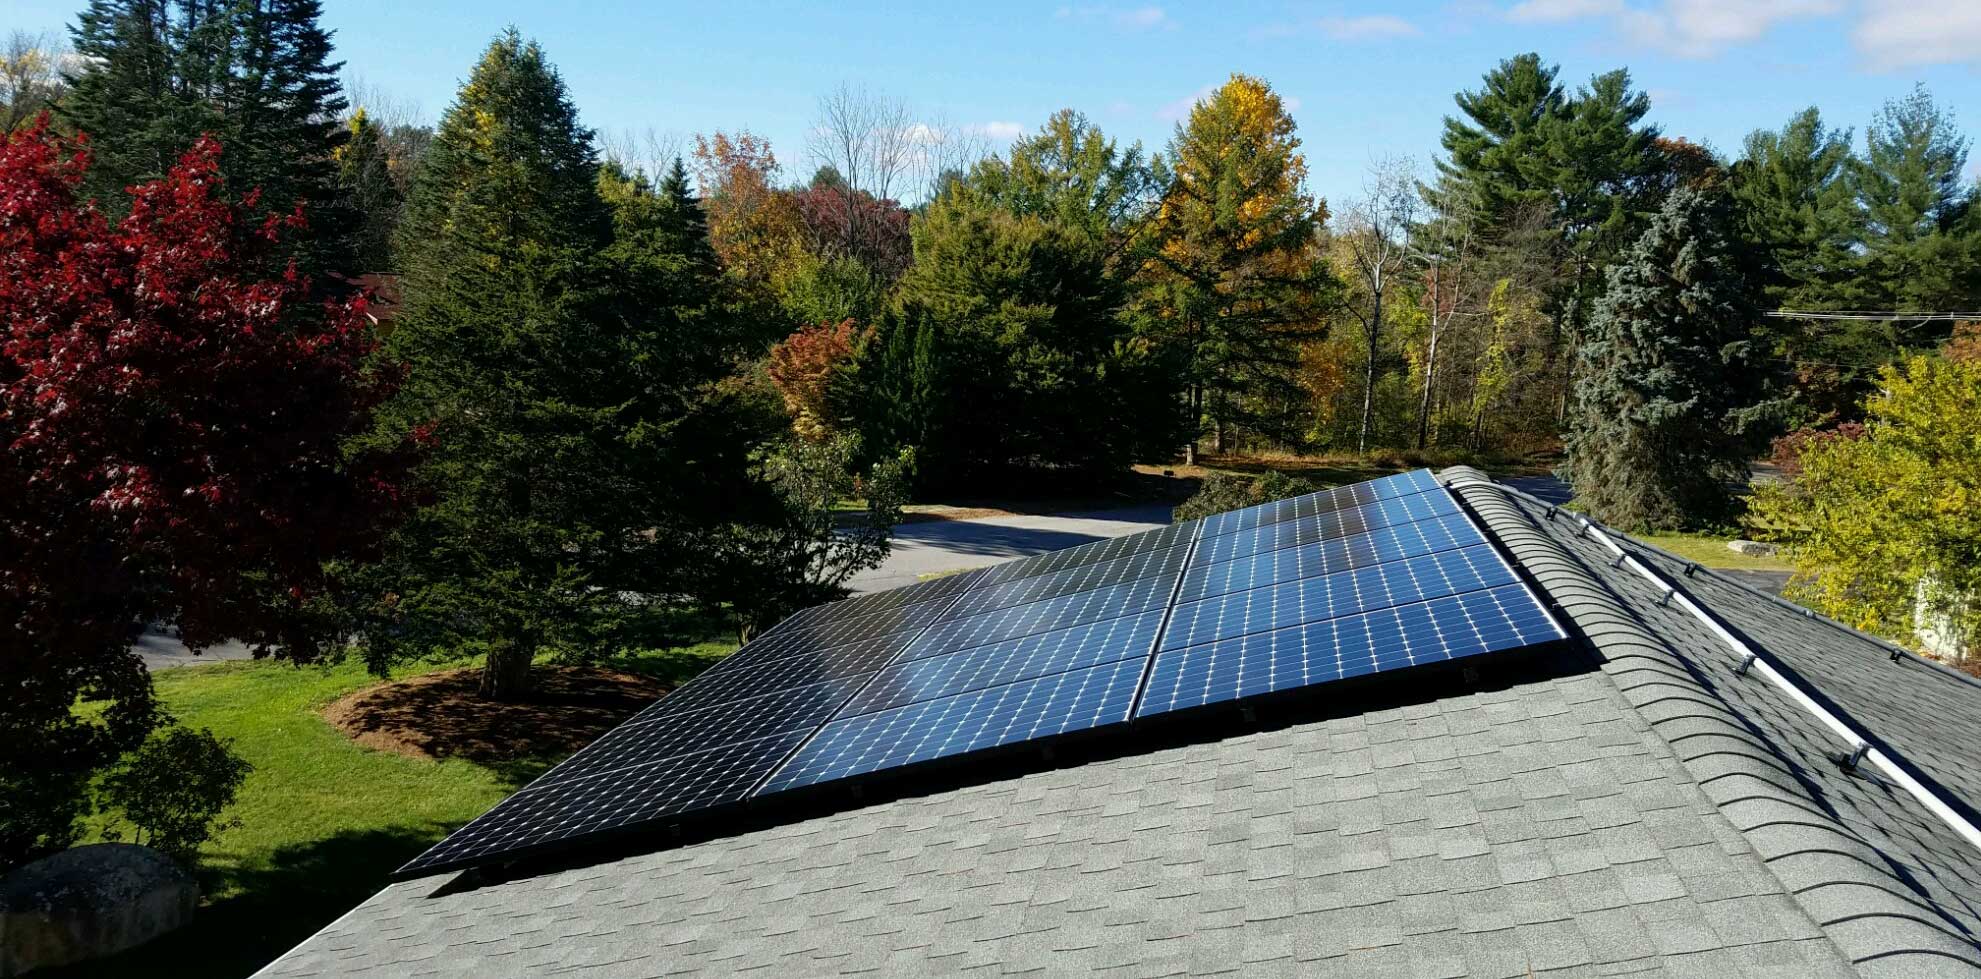 sunpower panels on a roof